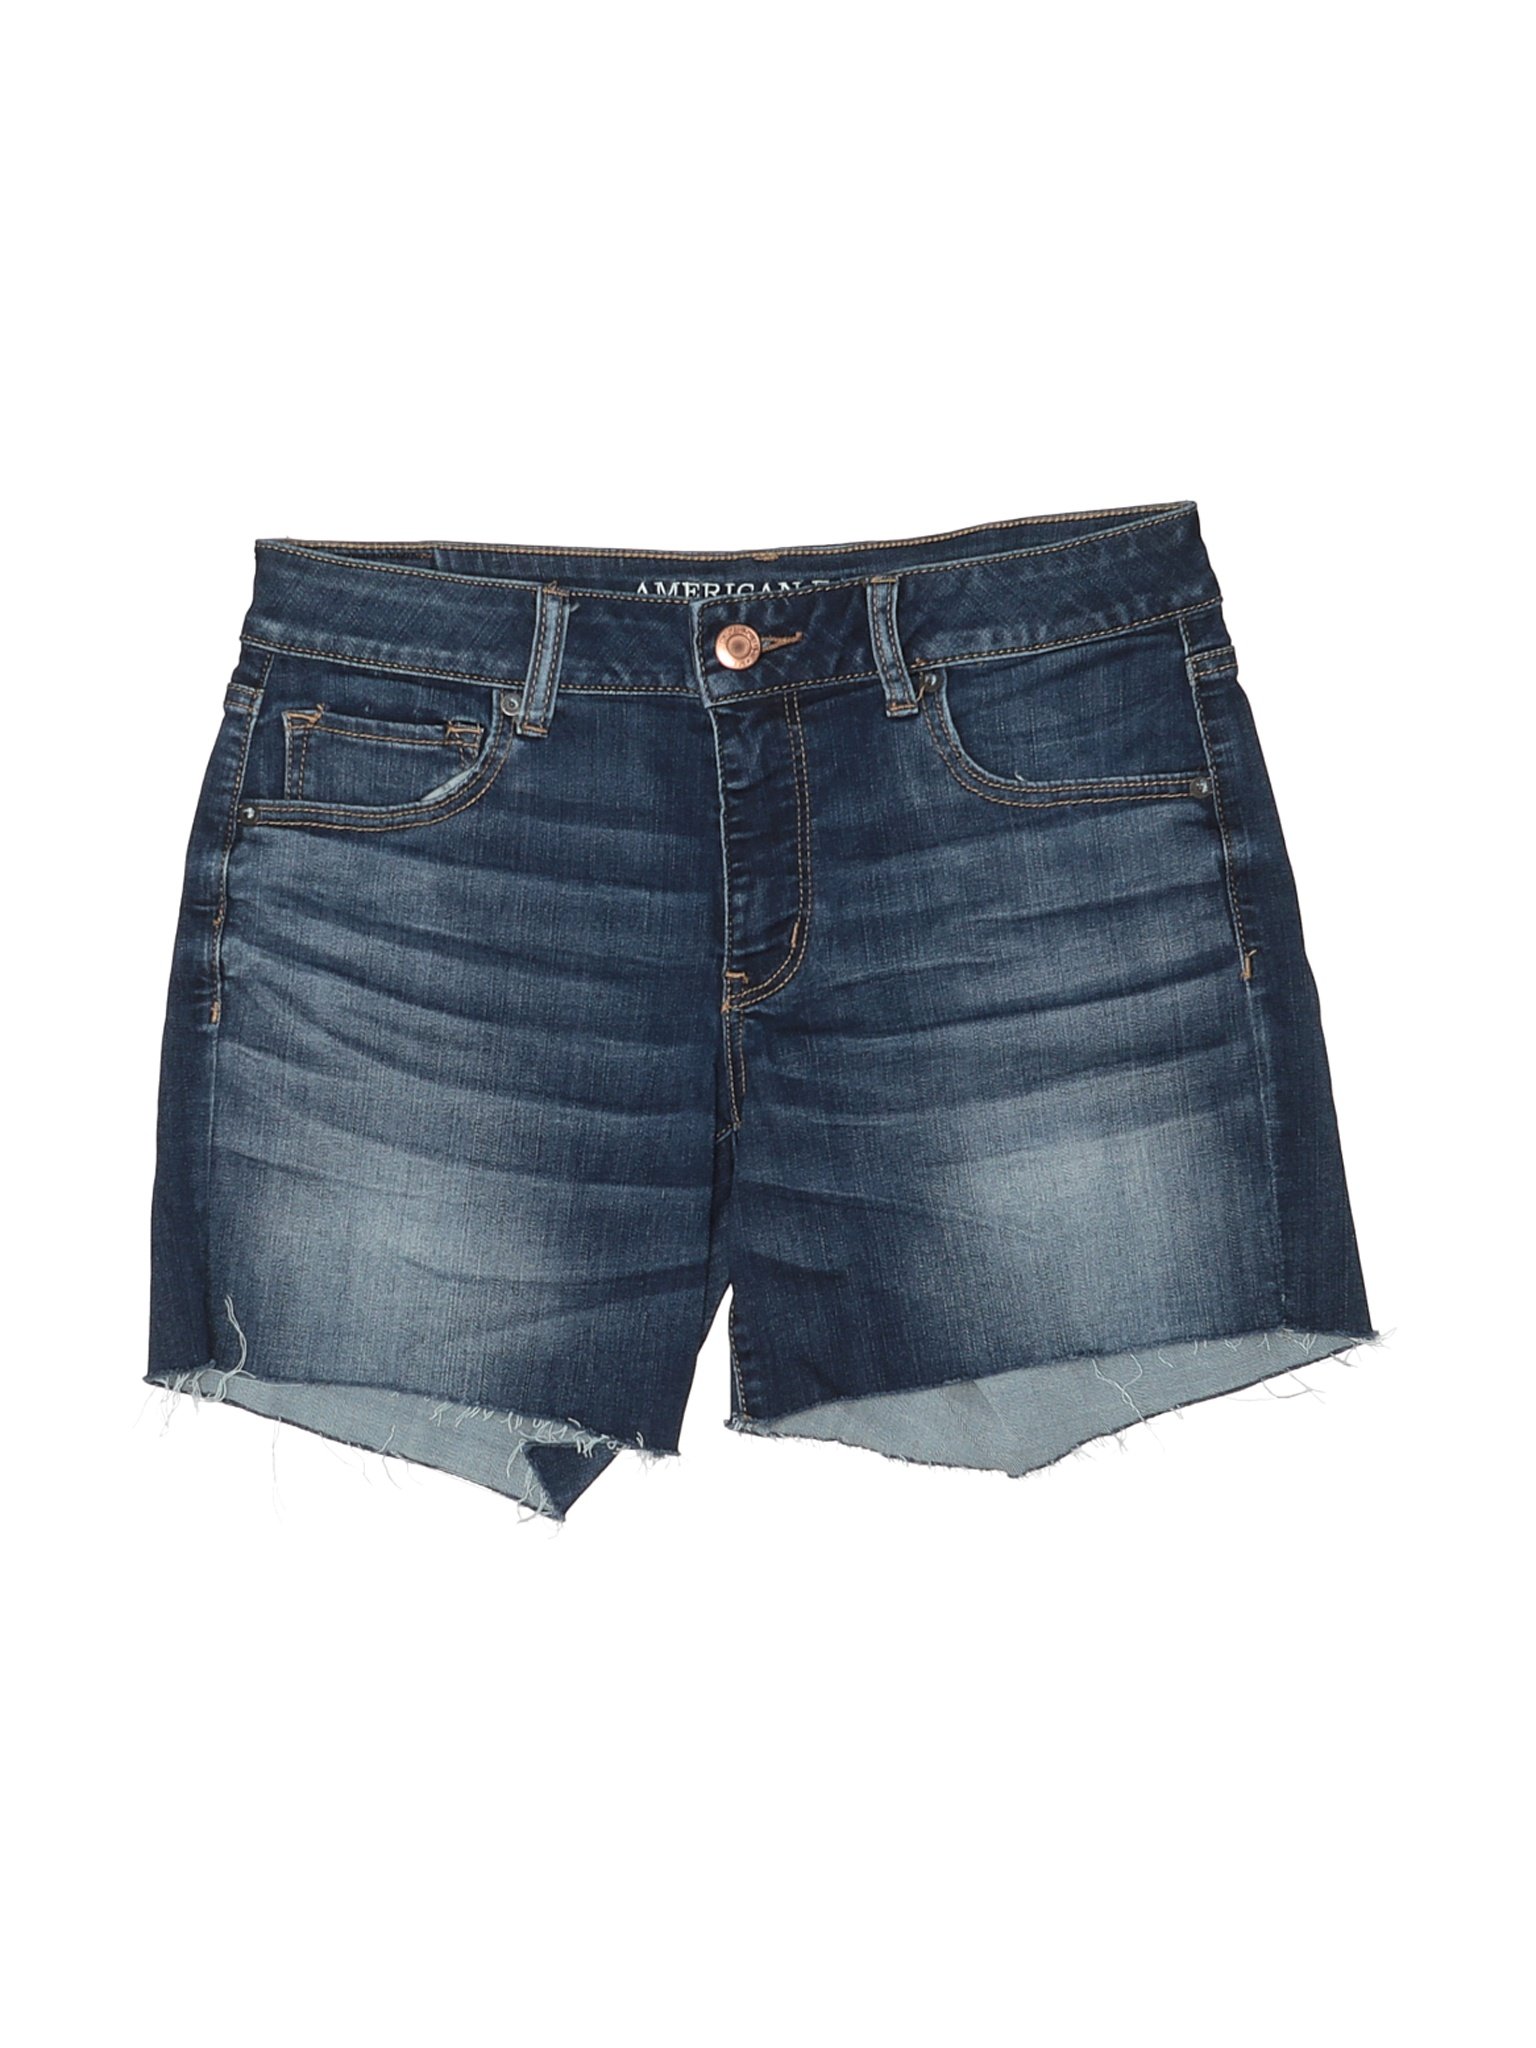 American Eagle Outfitters Women Blue Denim Shorts 12 | eBay